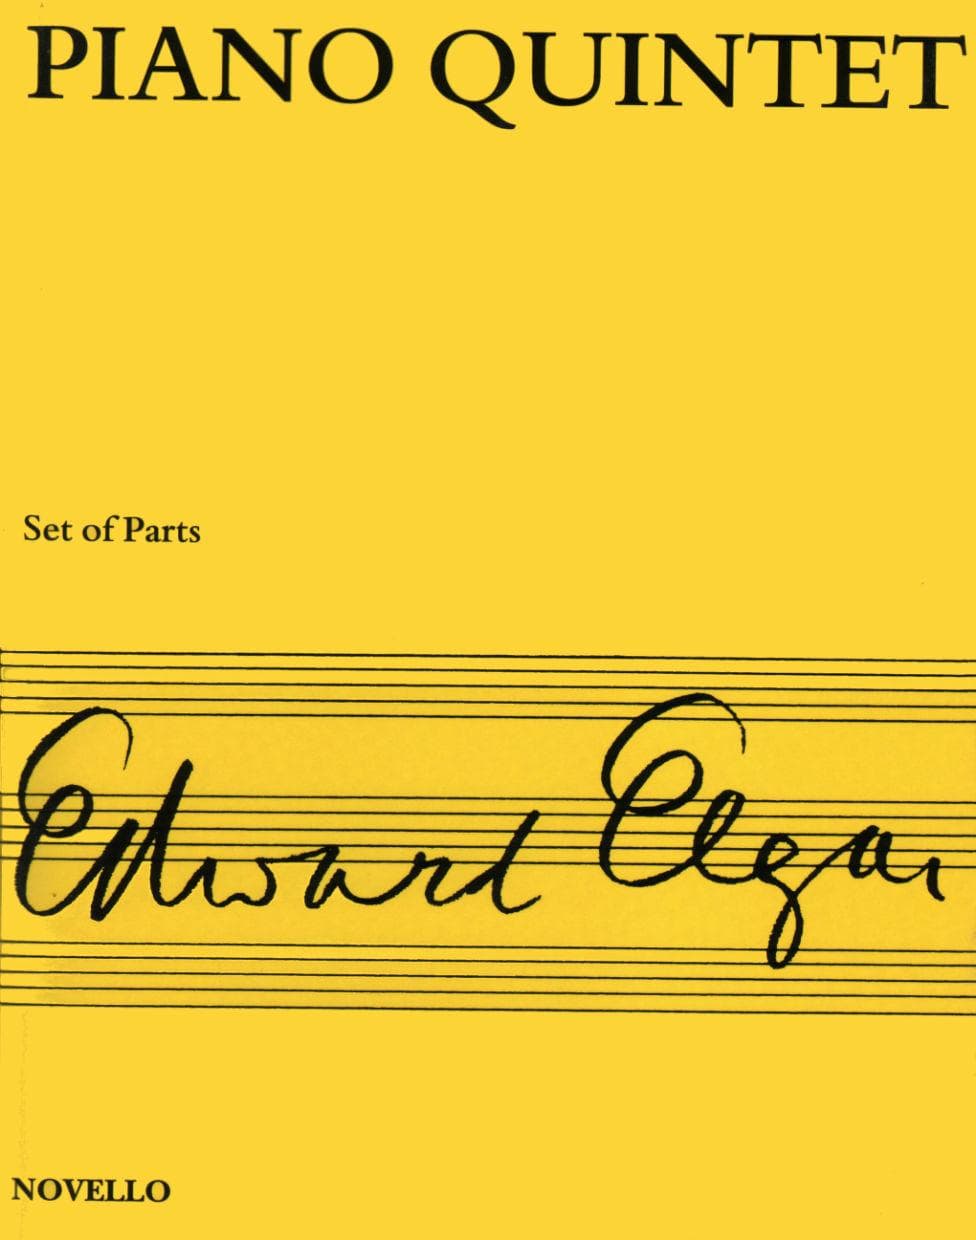 Elgar, Edward - Piano Quintet in a minor, Op 84 - Two Violins, Viola, Cello, and Piano - Novello Edition